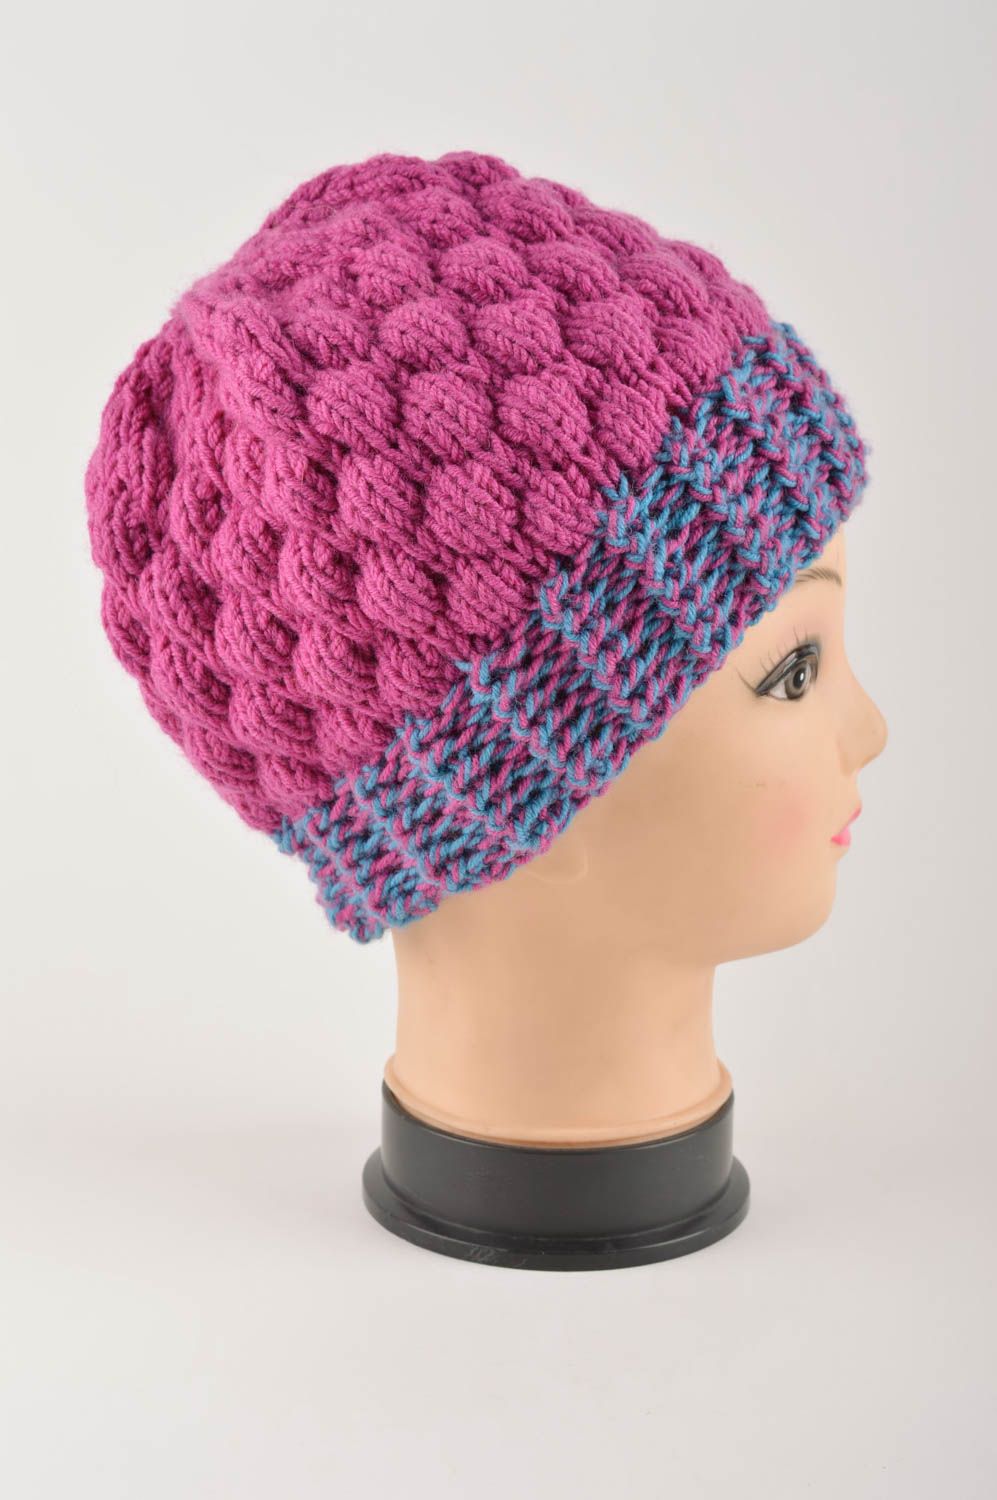 Handmade hat winter hat for girls unusual gift designer hat gift ideas  photo 4